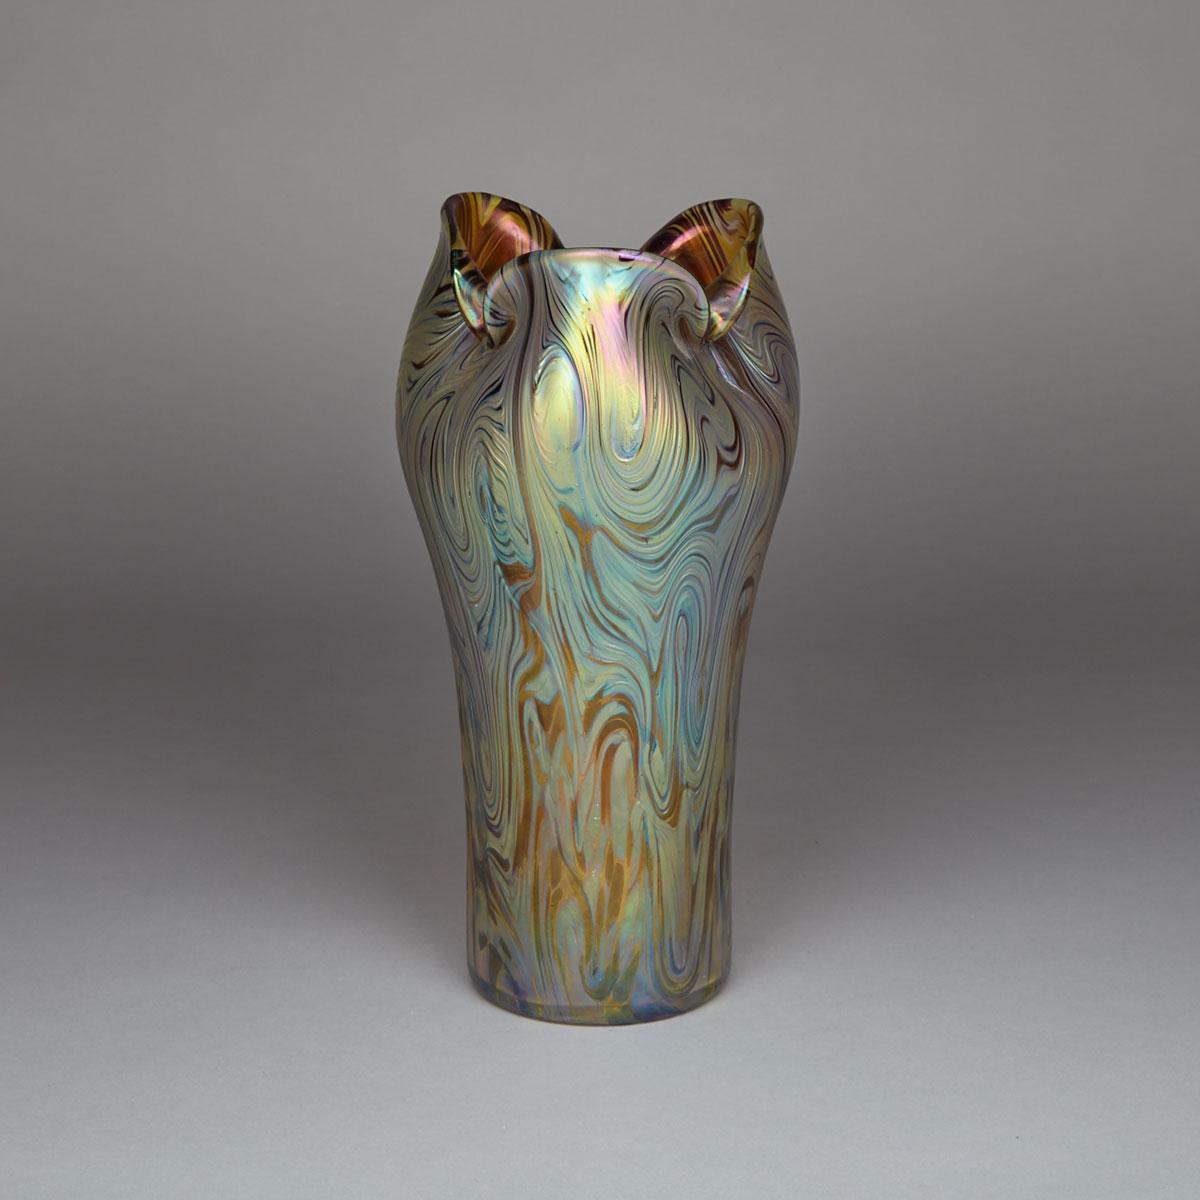 Rindskopf Iridescent Glass Vase, early 20th century